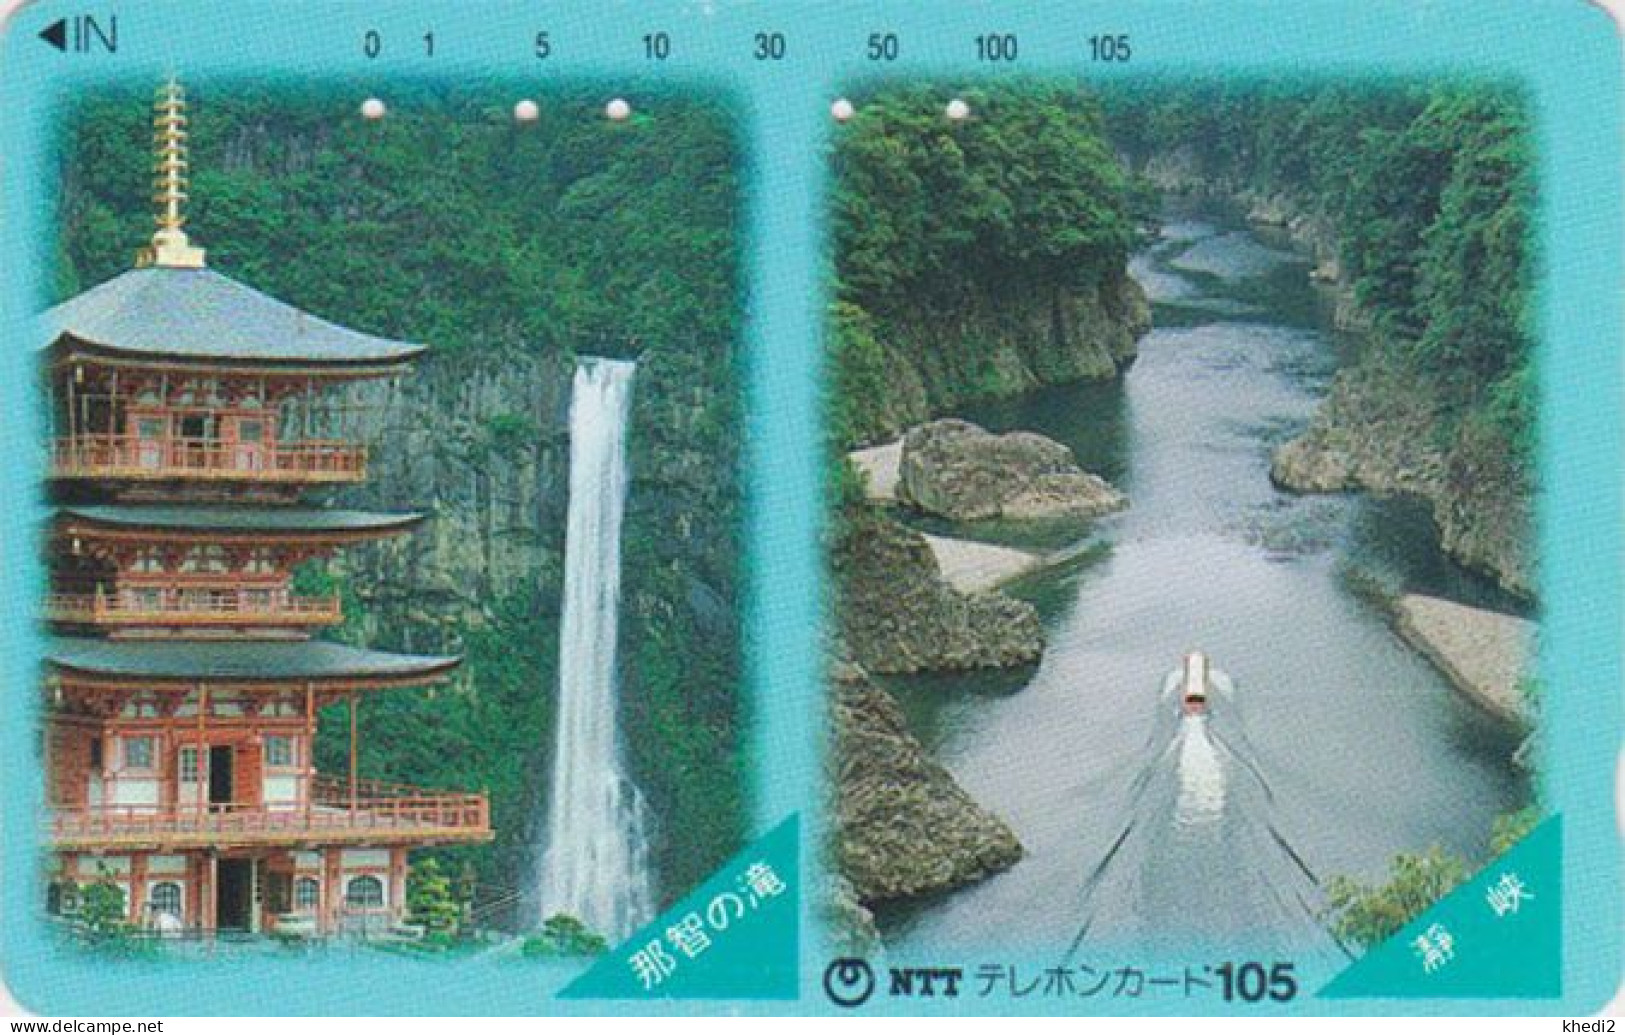 Télécarte JAPON / NTT 330-087 A VERSO KDD - PAGODE CASCADE BATEAU - CASTLE WATERFALL SHIP - JAPAN Phonecard - Japon